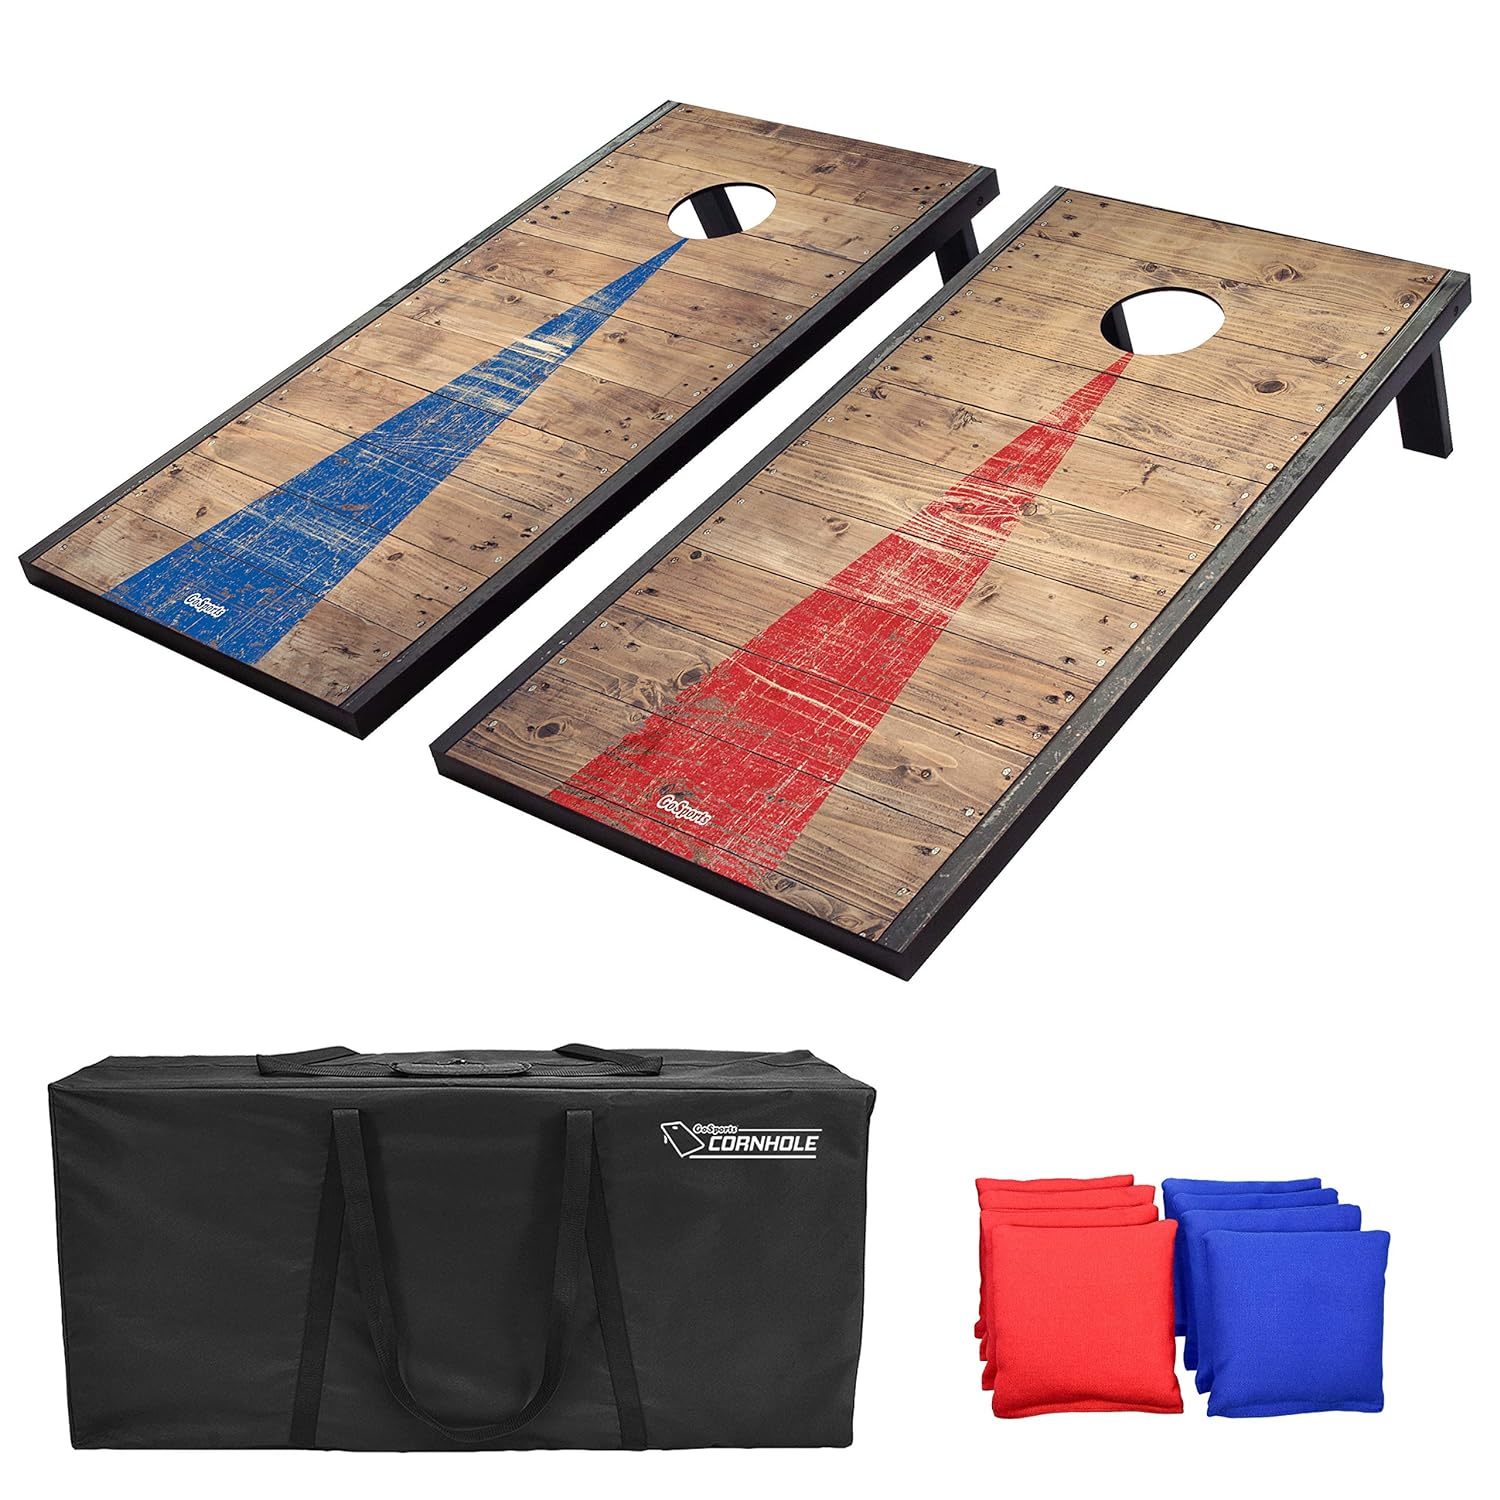 GoSports 4x2feet Classic Cornhole Set with Rustic Wood Finish | Includes 8 Bags, - $169.99